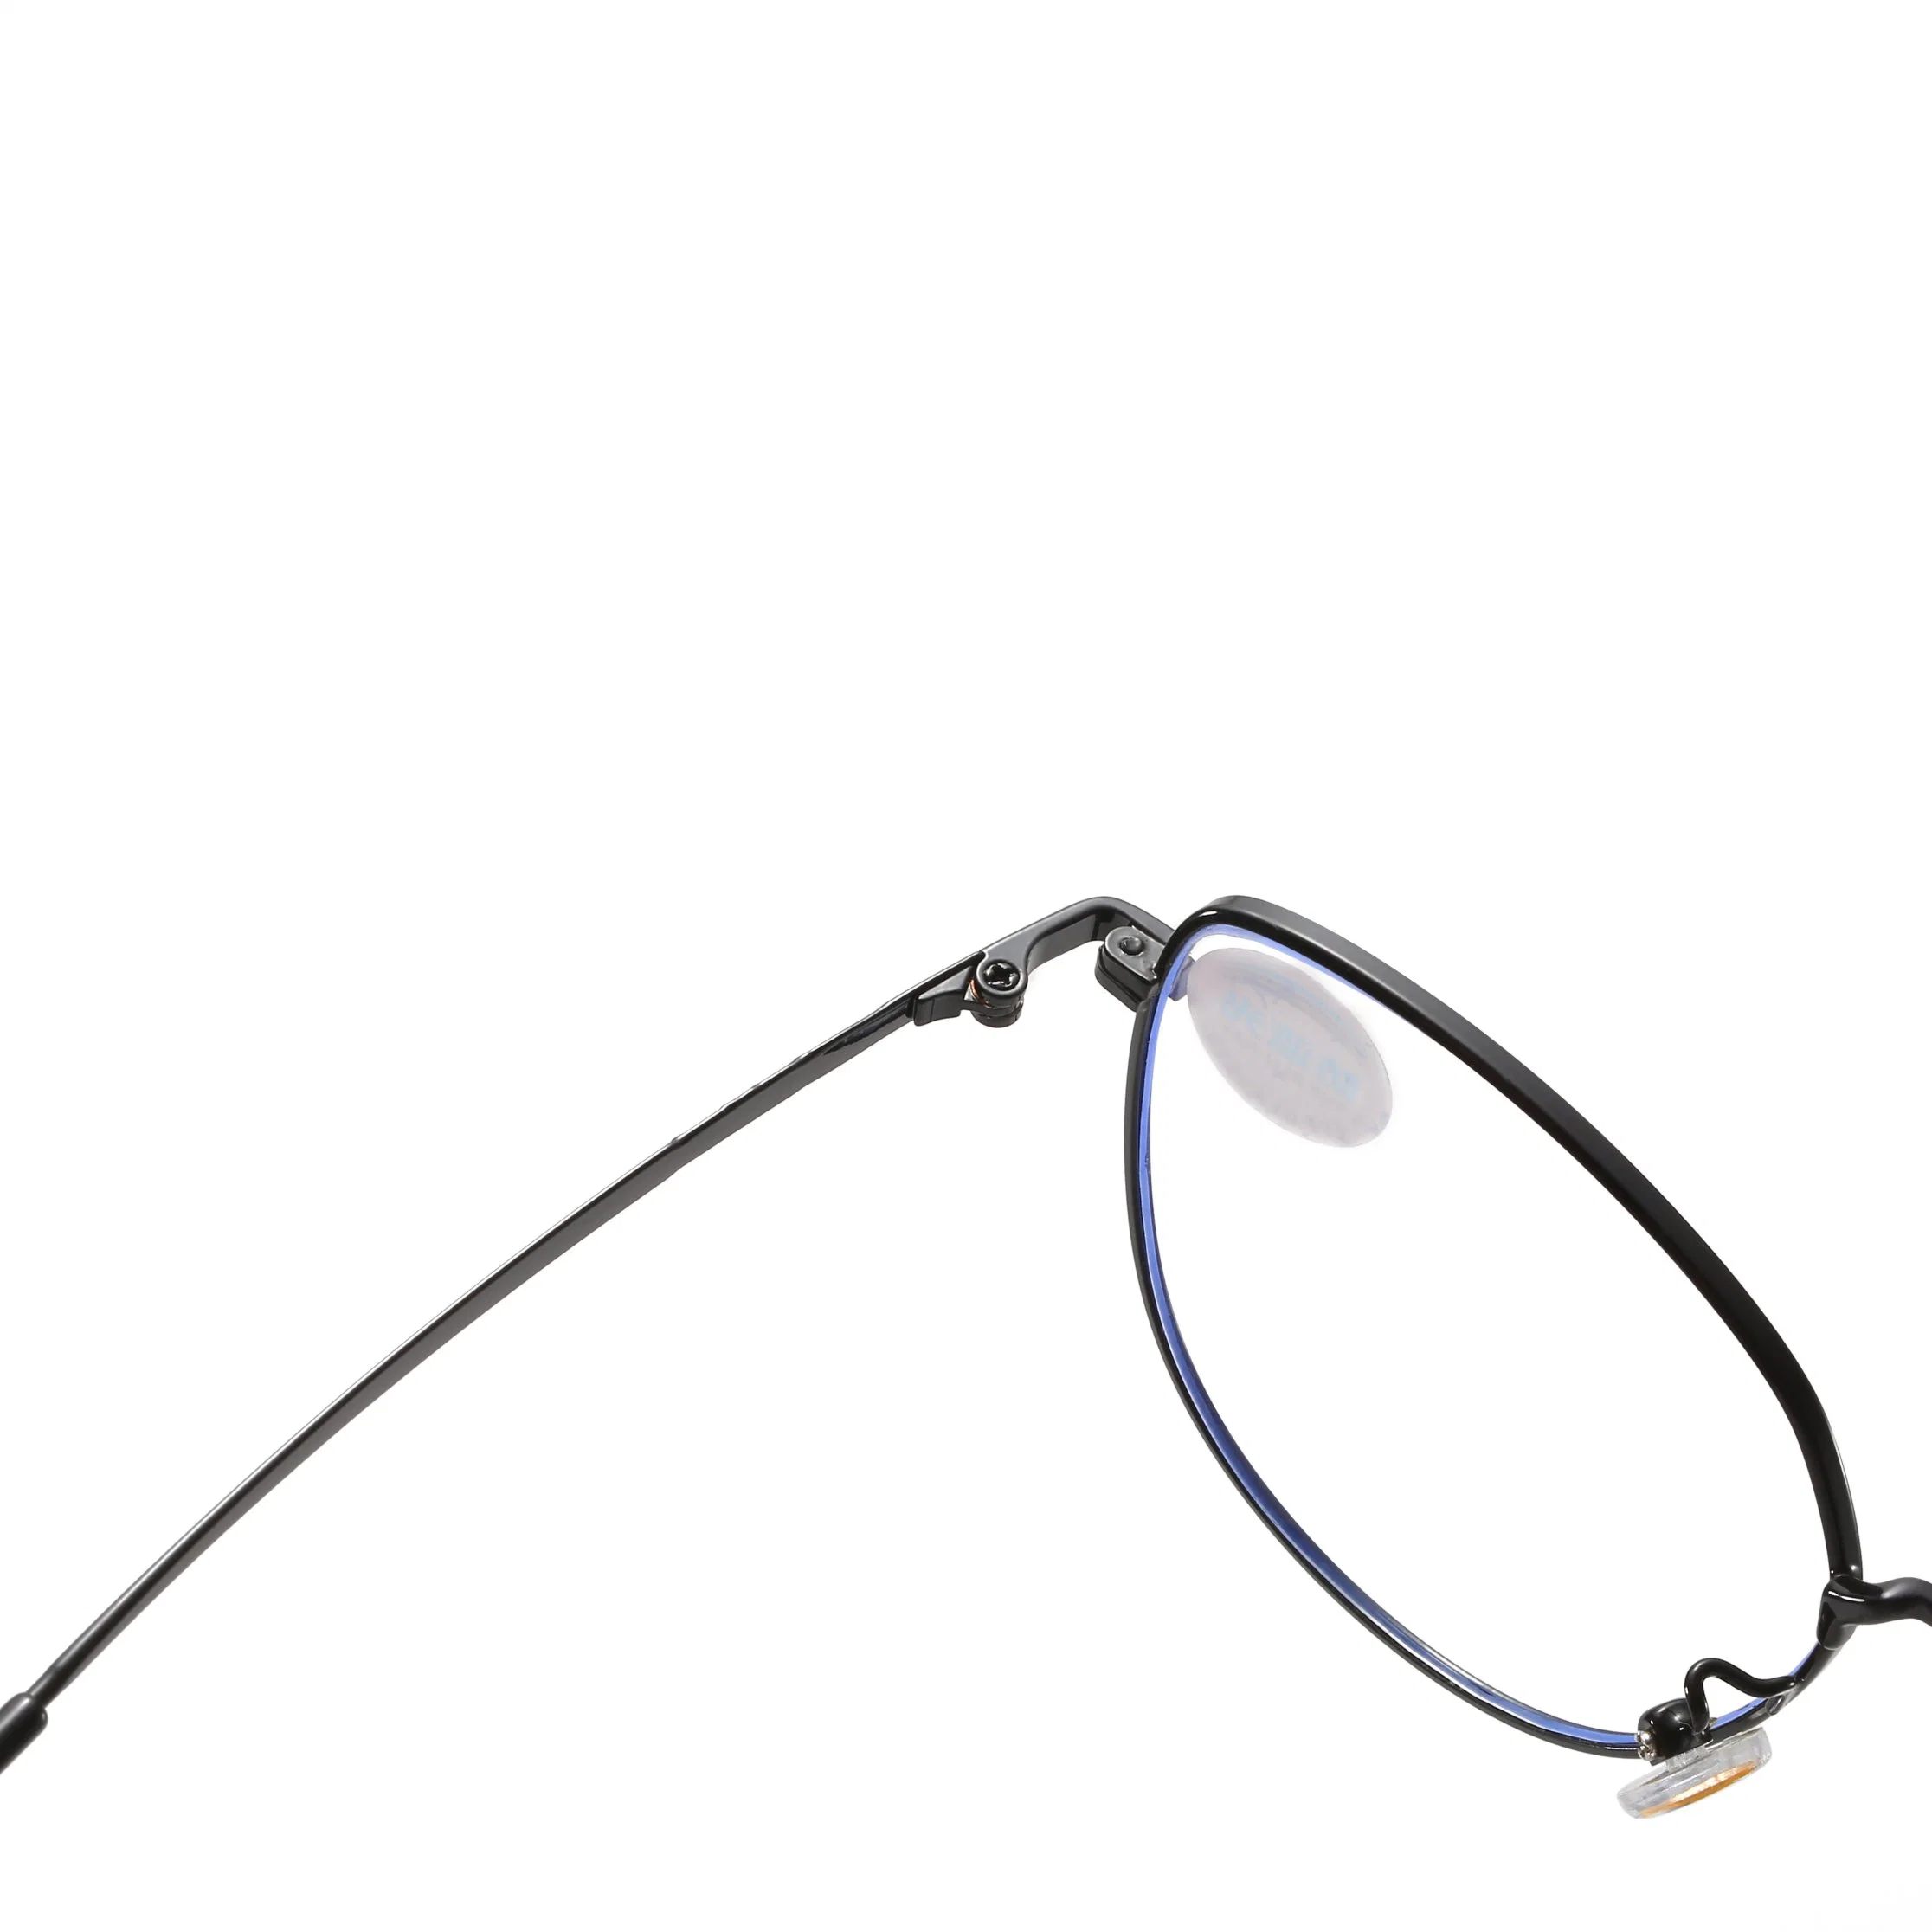 Stock Yellow Lens Anti Blue Light Eye Glasses UV Protection Optical Frame Stylish Computer Glasses Frames